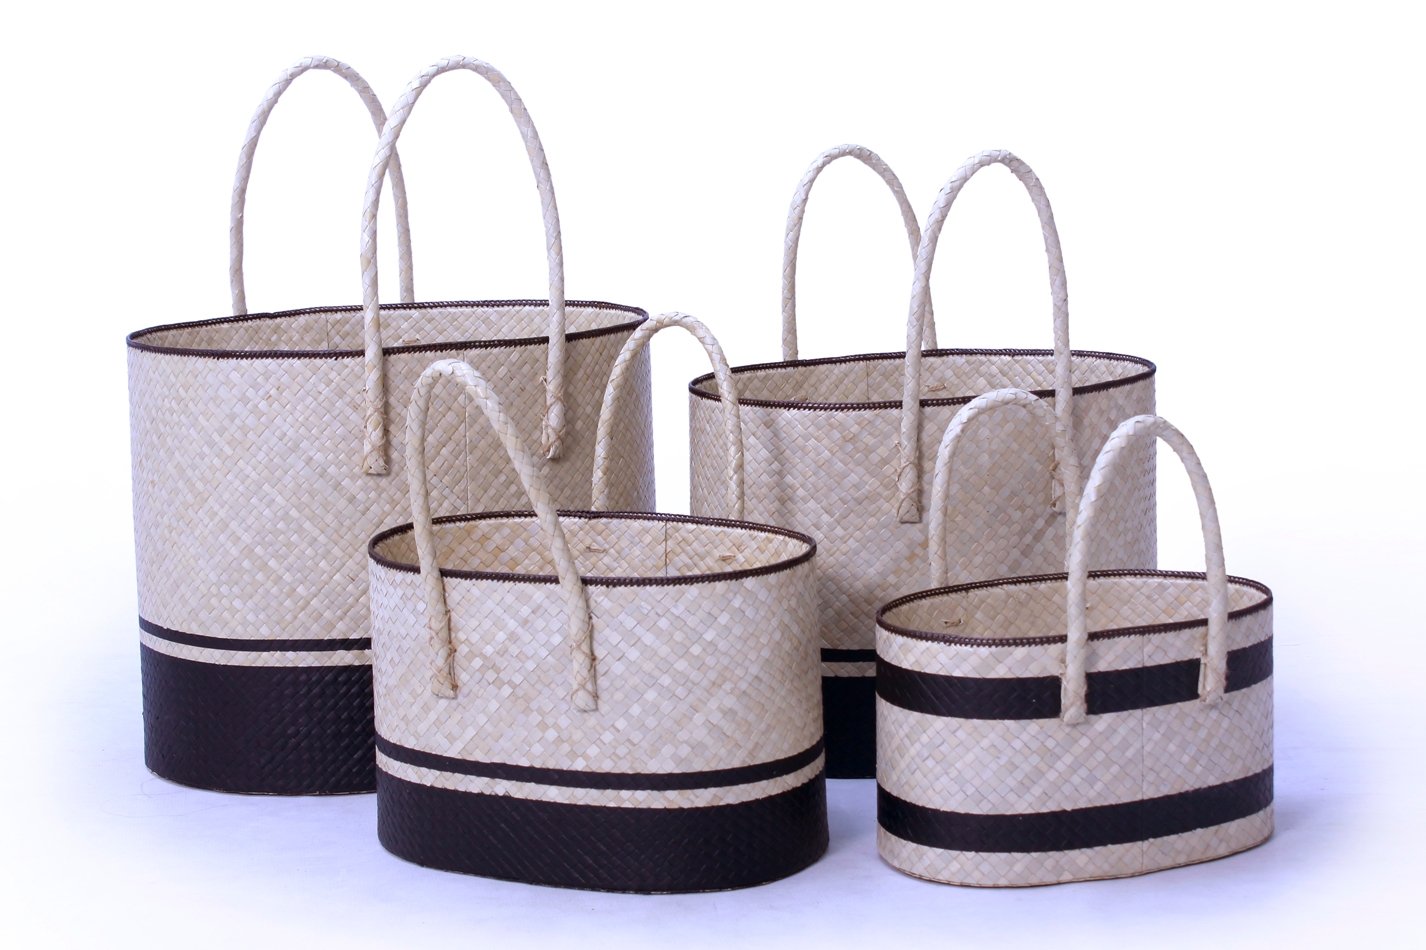 Pandanus oval basket set of 4 handicraft